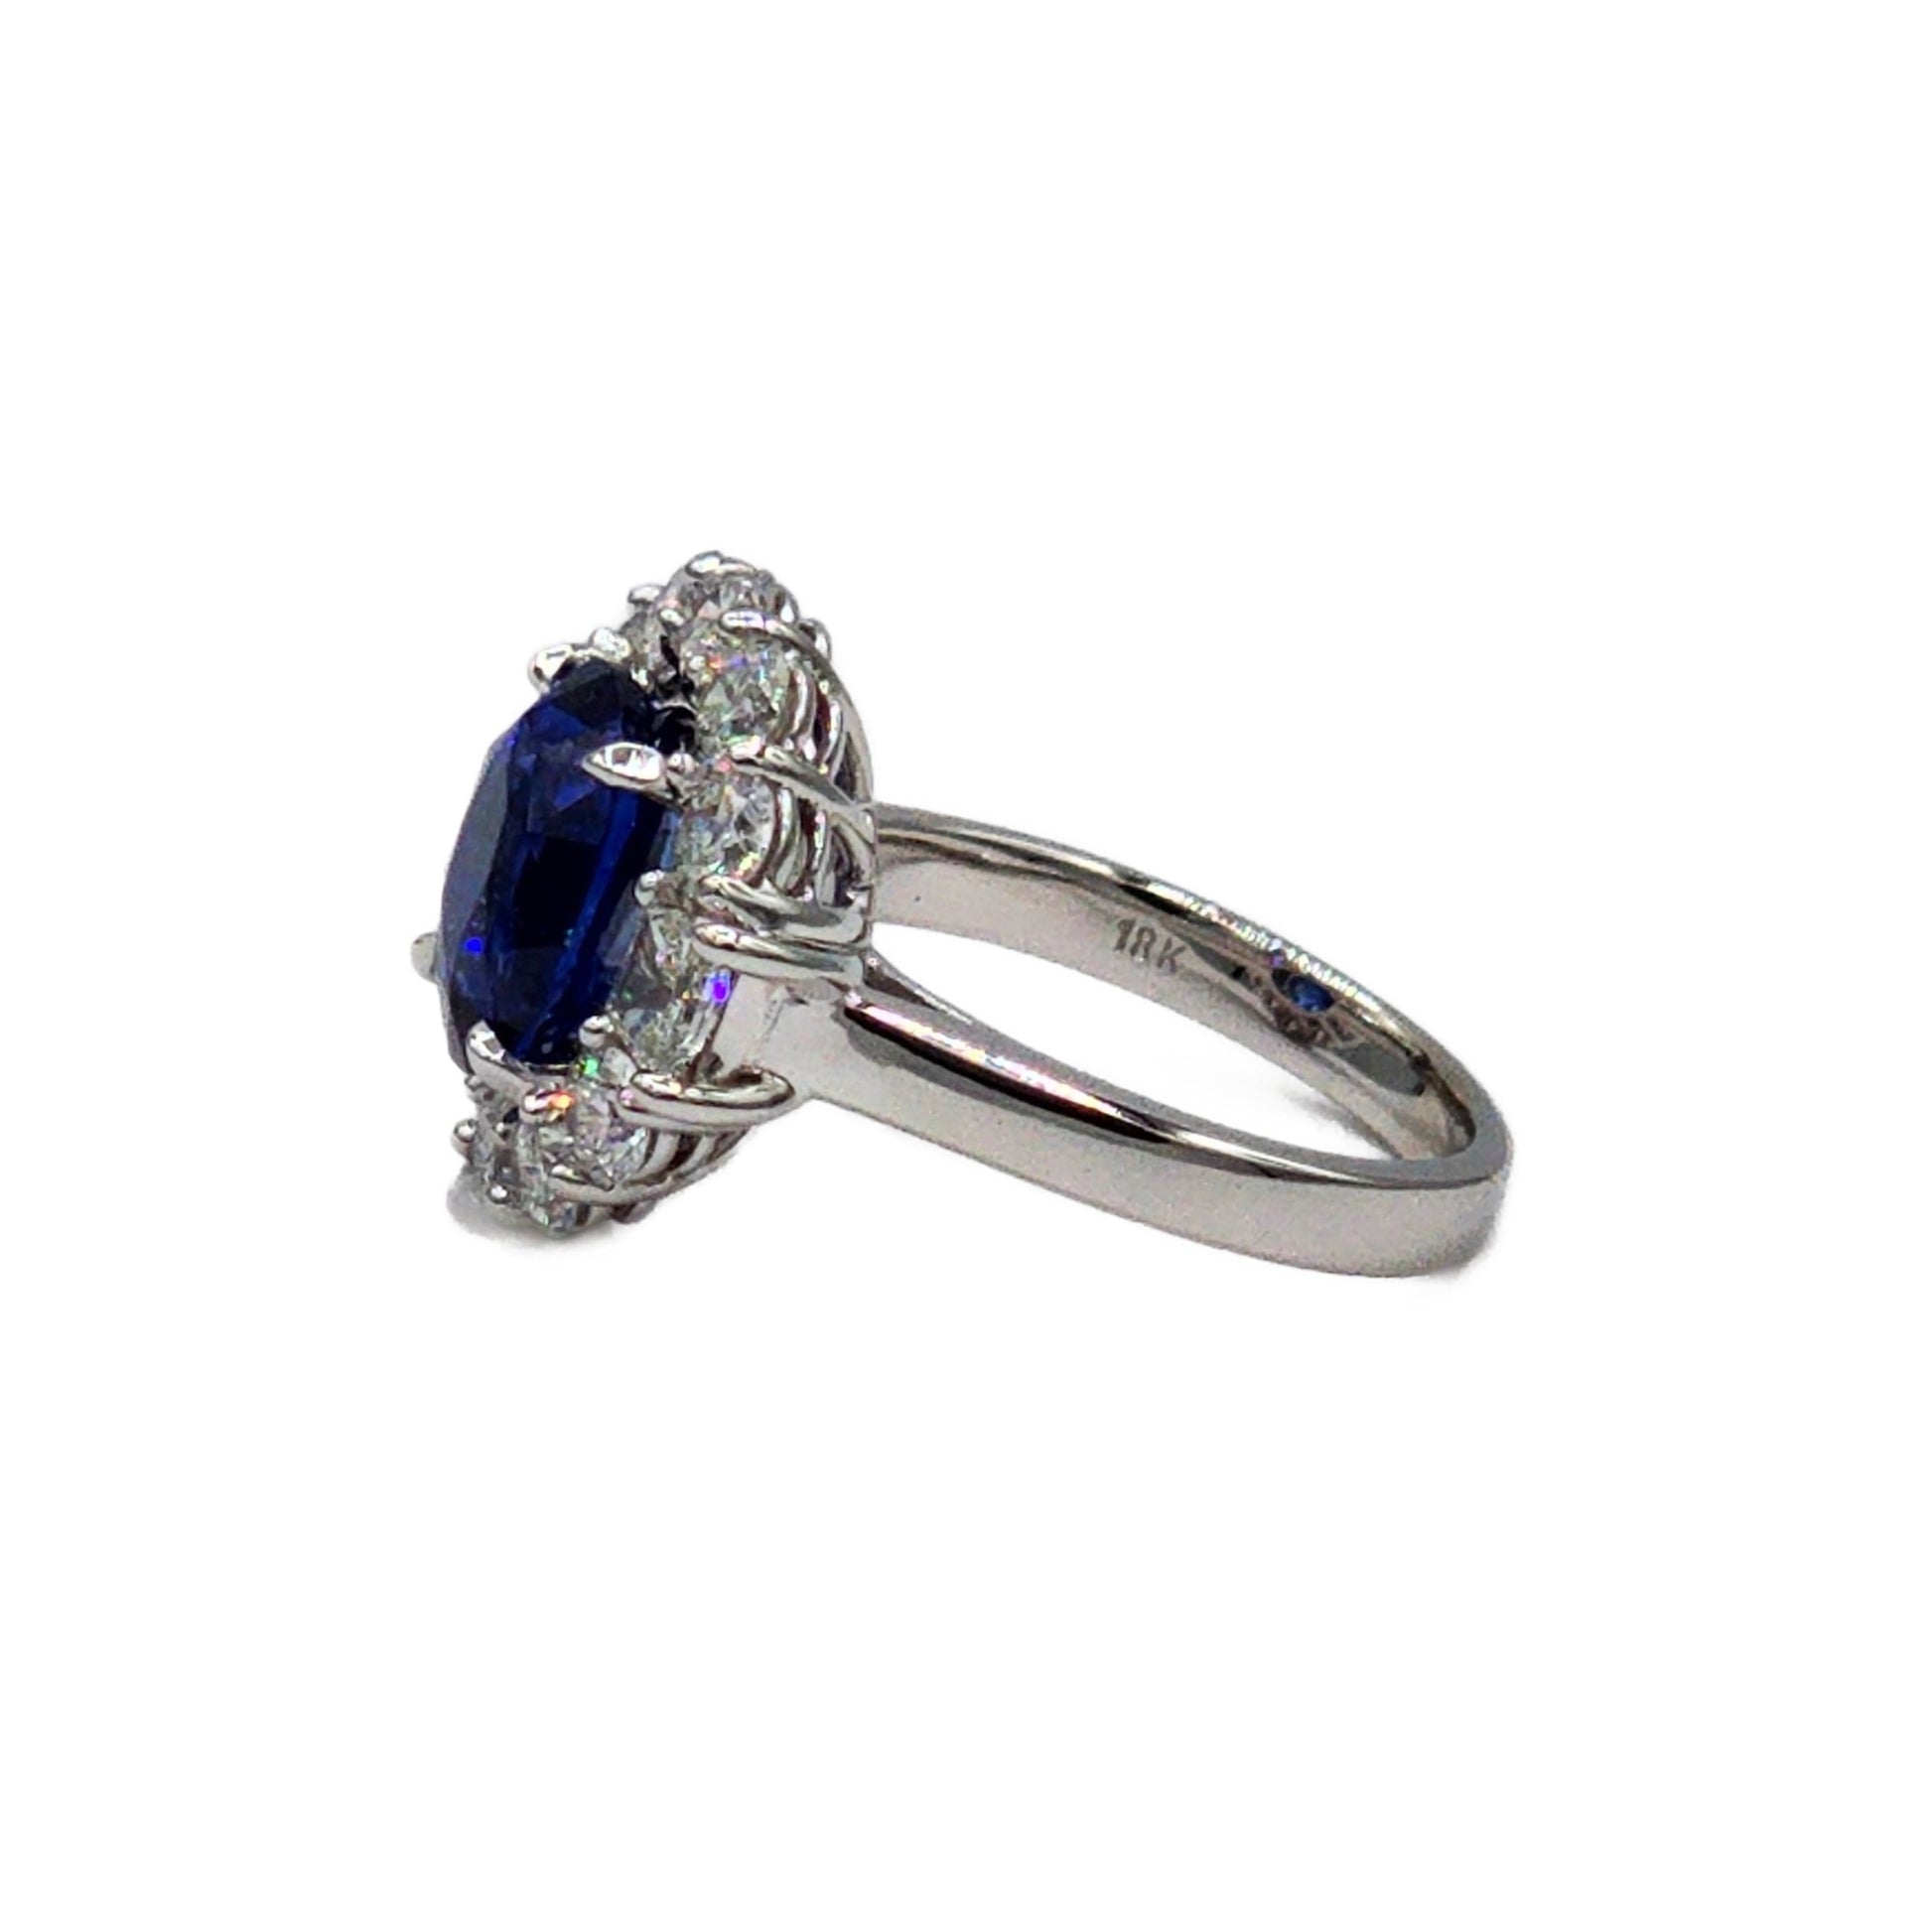 18K White Gold Sapphire and Diamond Ring